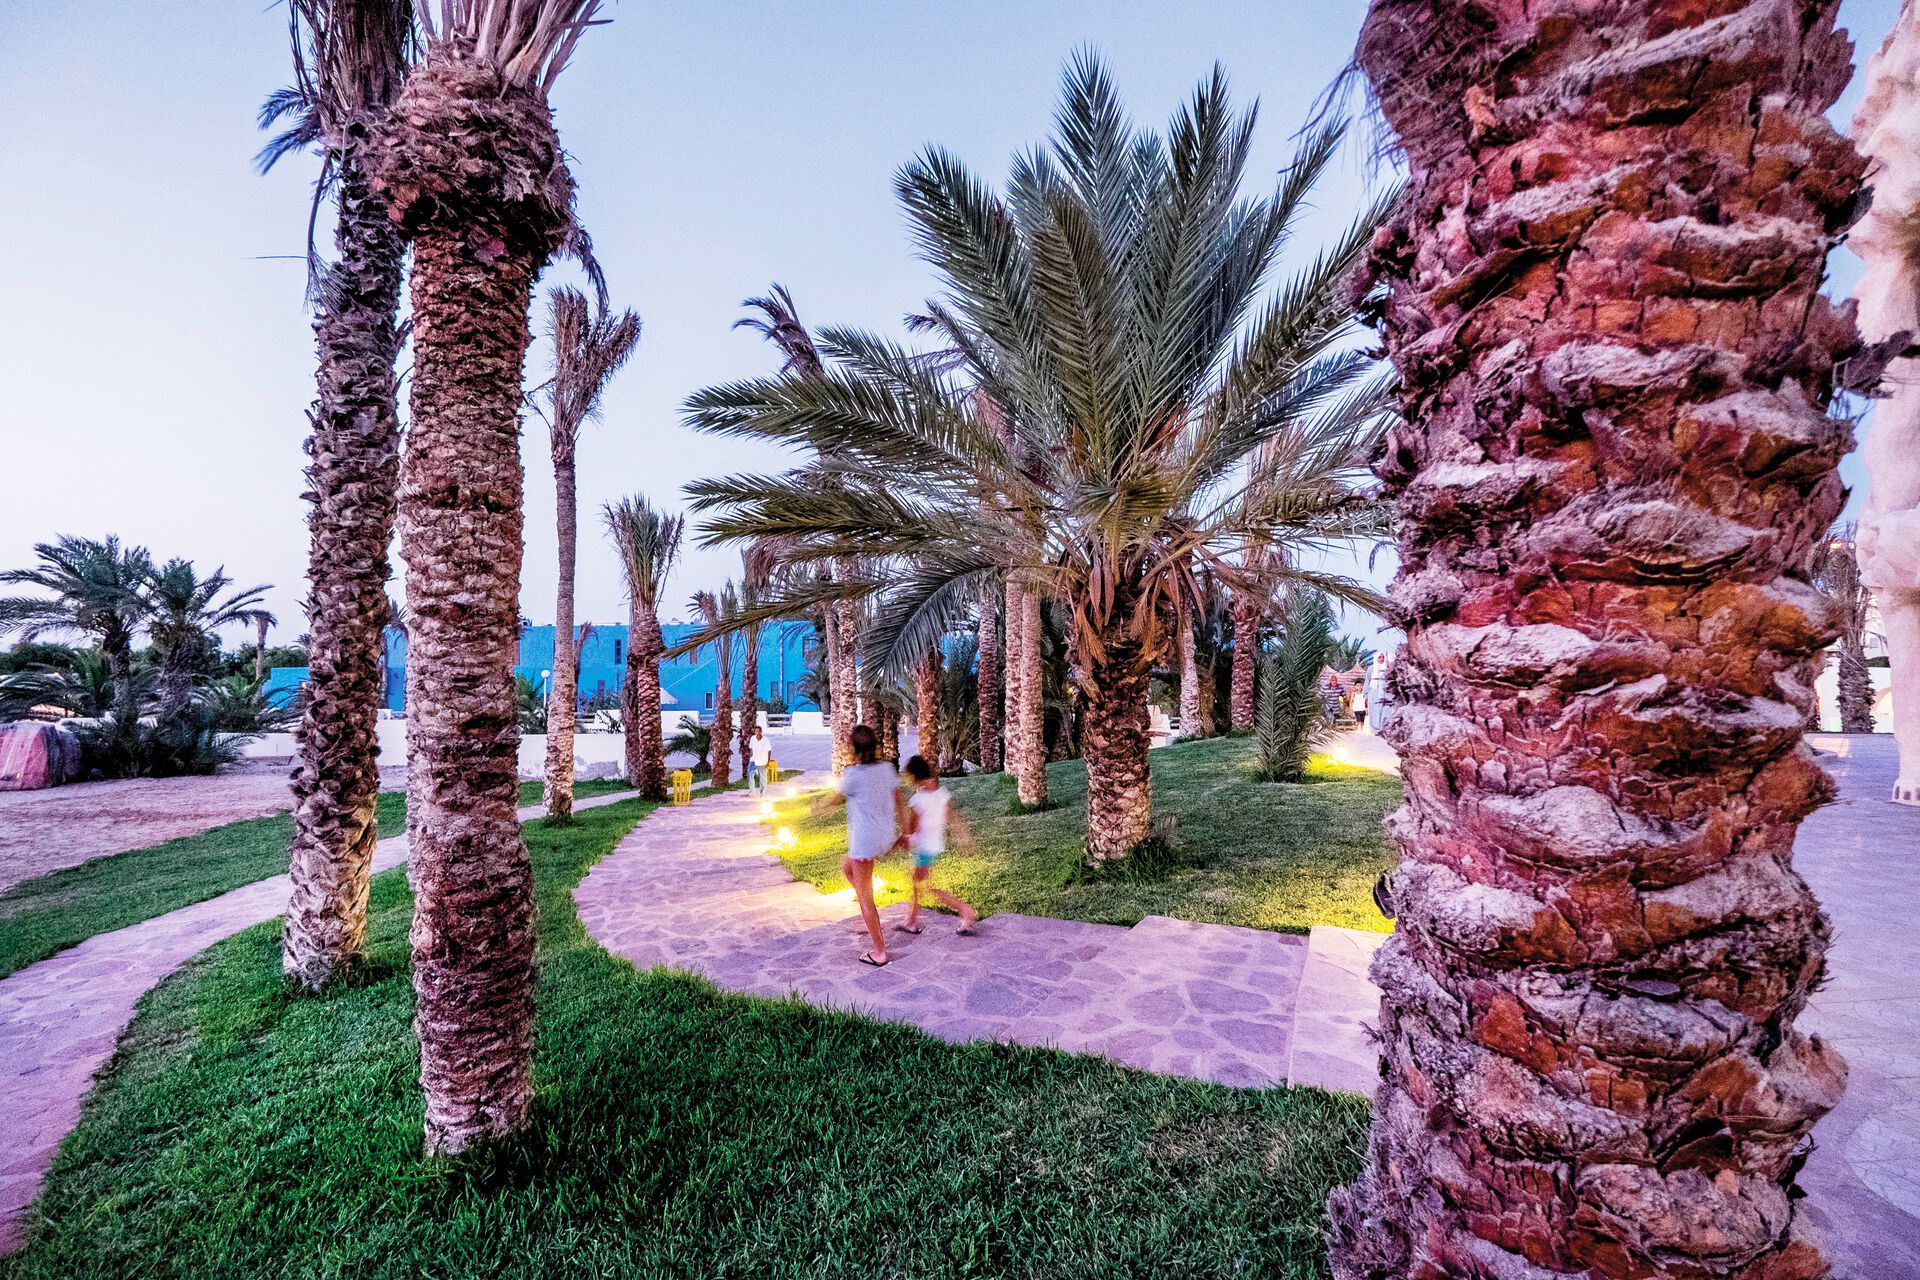 Tunisie - Djerba - Hotel Baya Beach Aqua Park Resort & Thalasso 3*